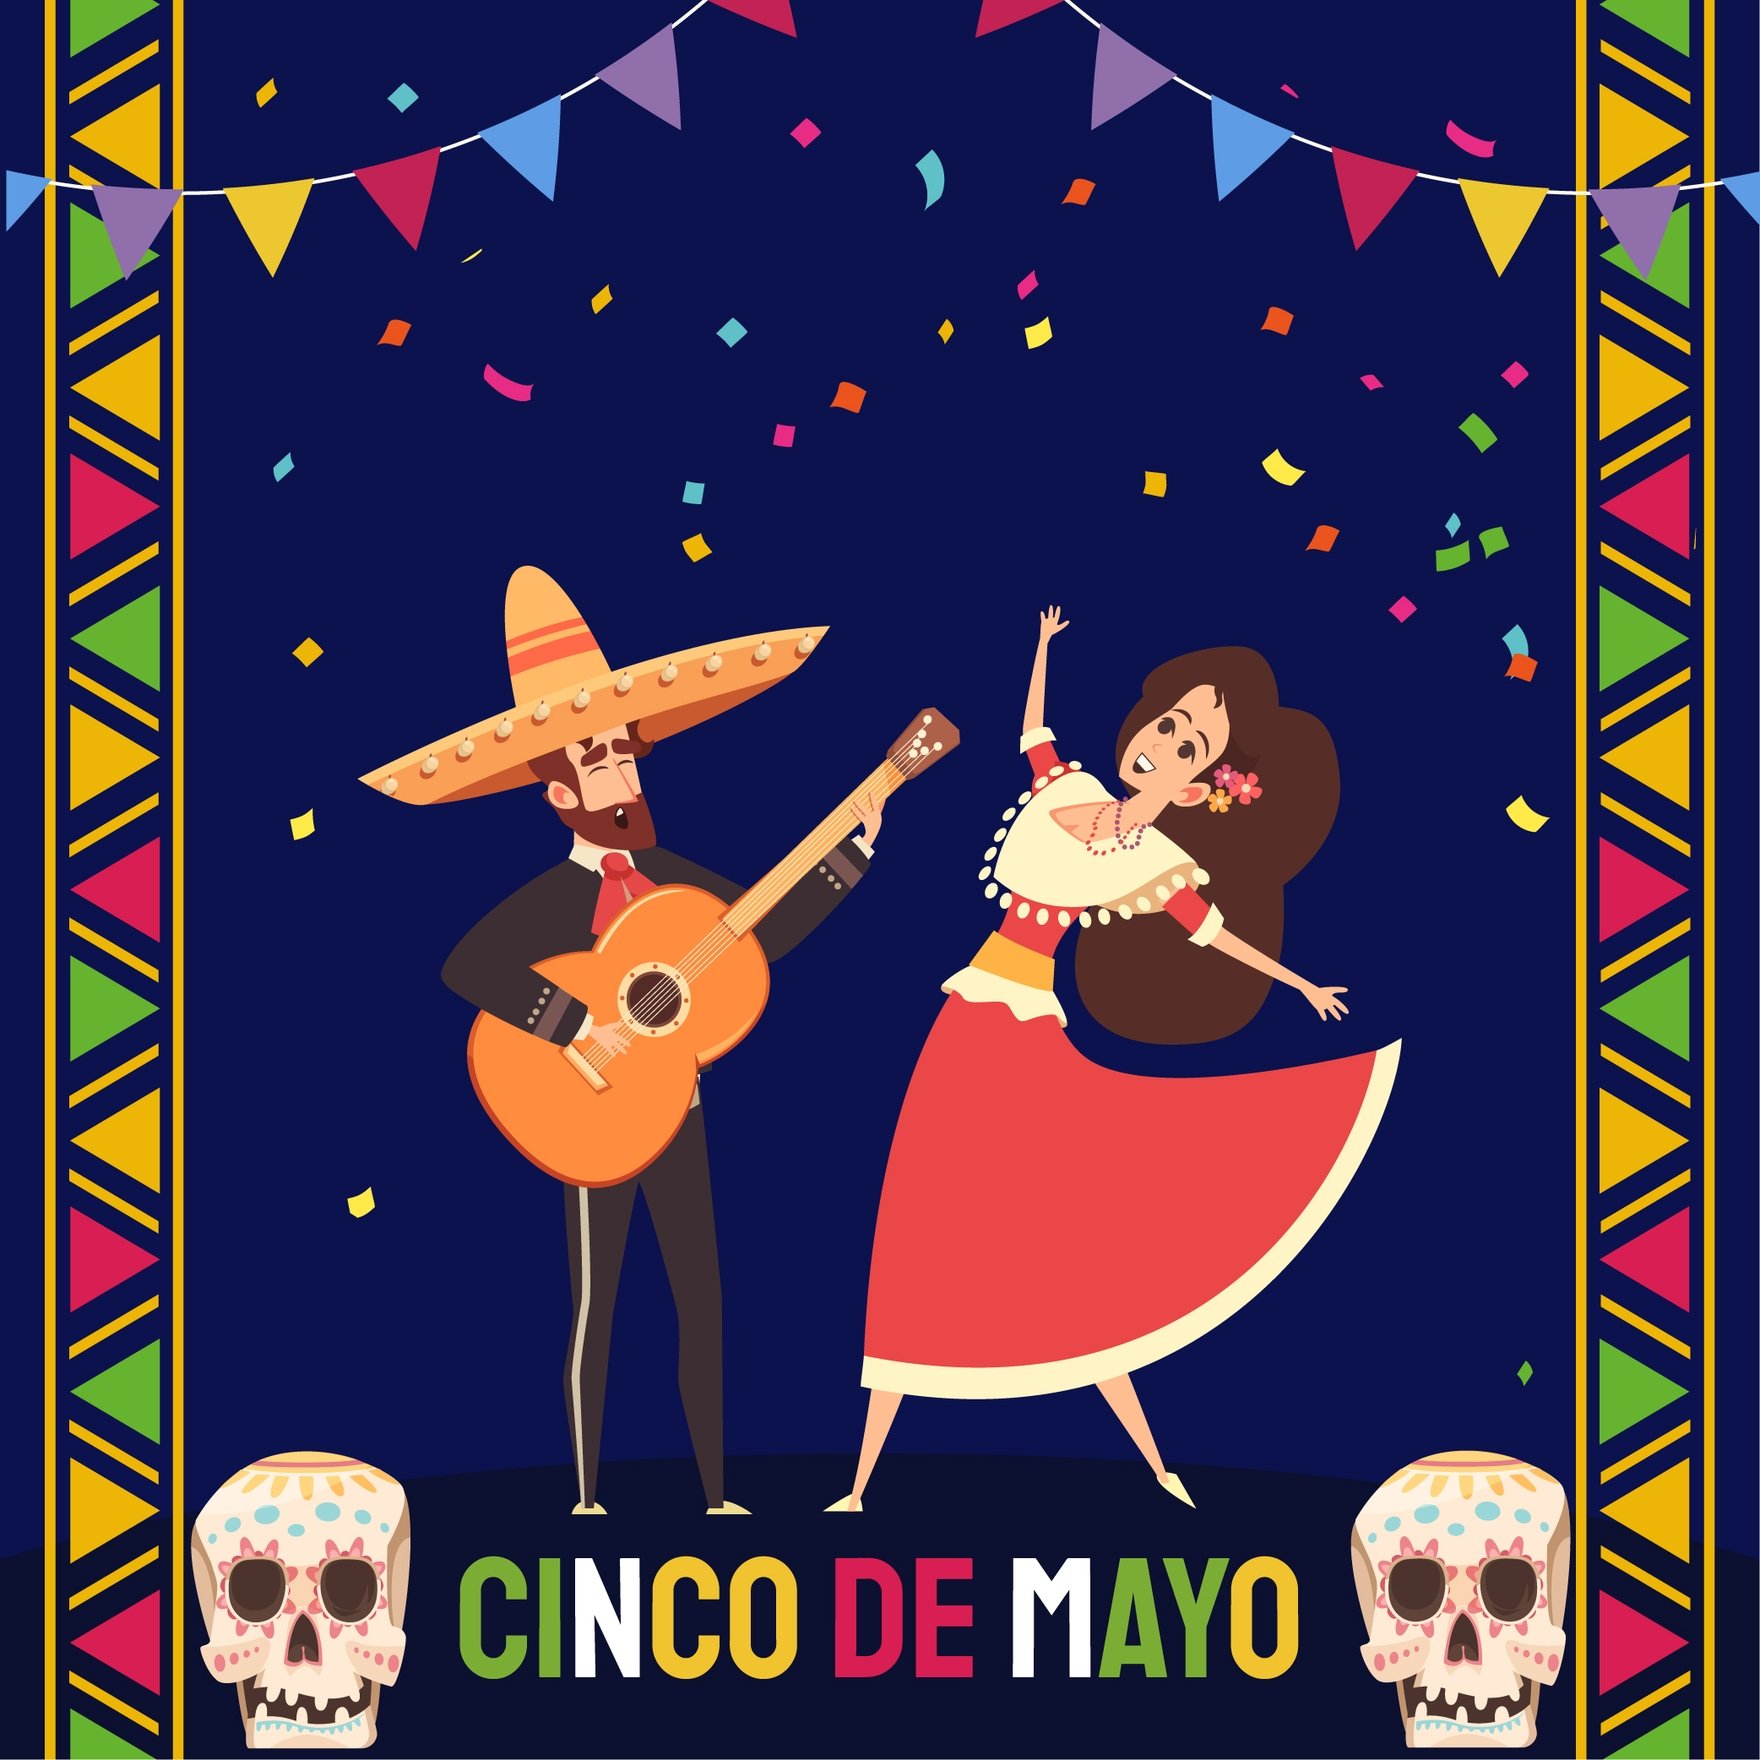 Free Happy Cinco De Mayo Festive in Illustrator, EPS, SVG, JPG, PNG